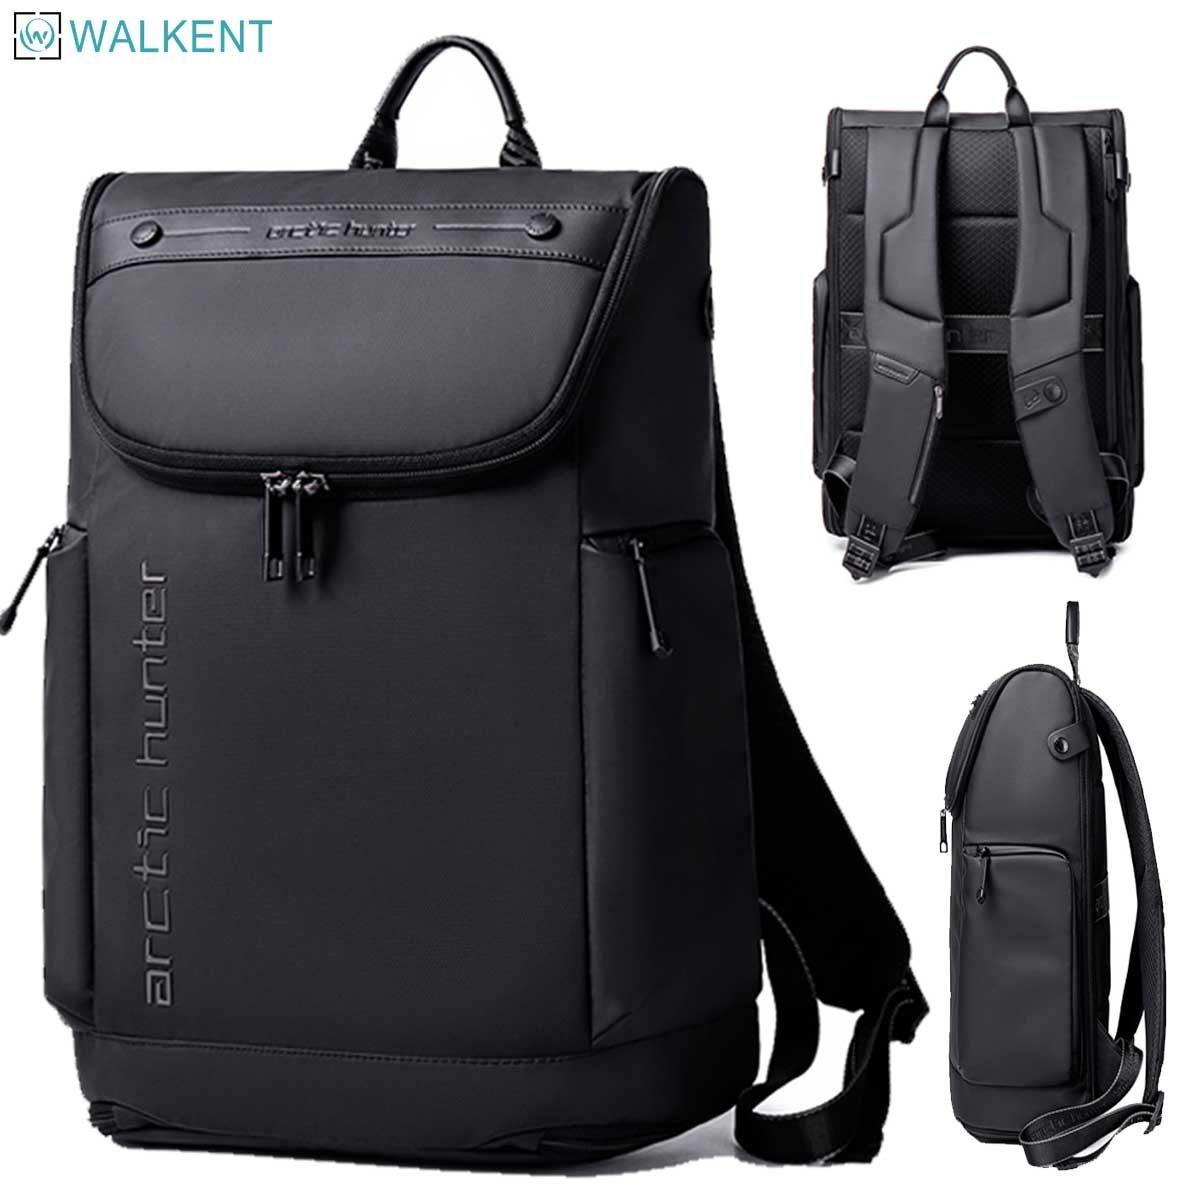 Walkent - Eden Artic Hunter Laptop Backpack